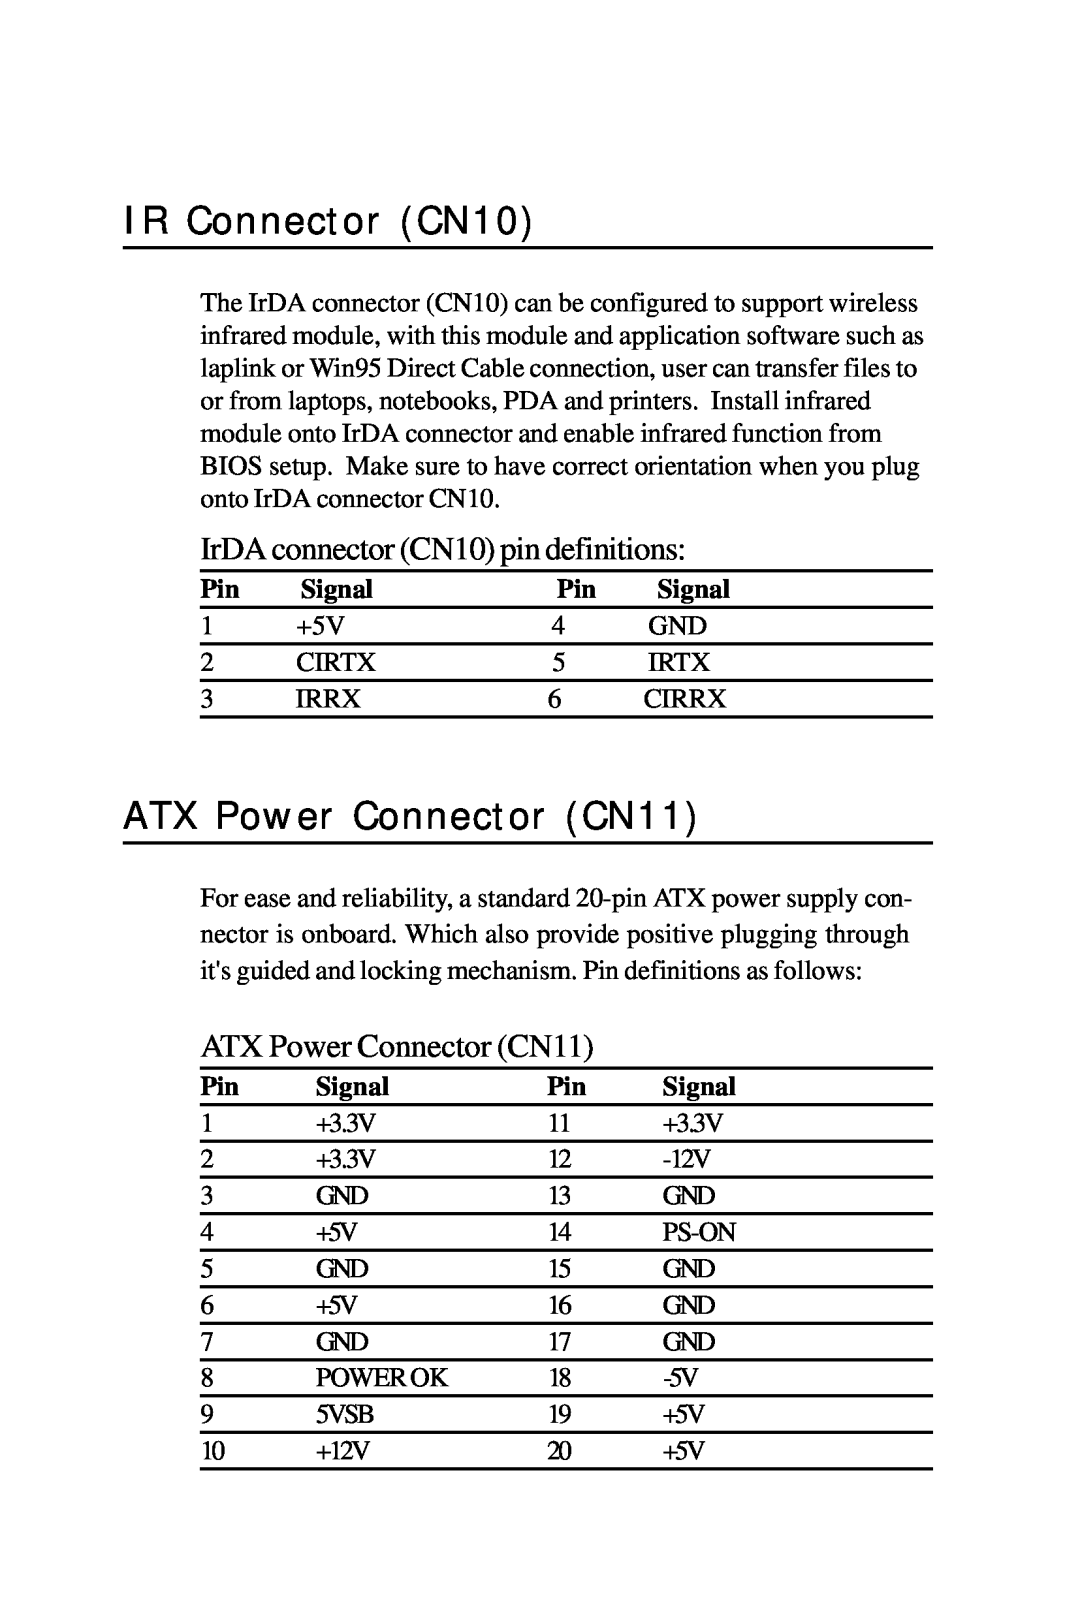 Intel PCM-6896 manual IR Connector CN10, ATX Power Connector CN11, IrDA connector CN10 pin definitions 